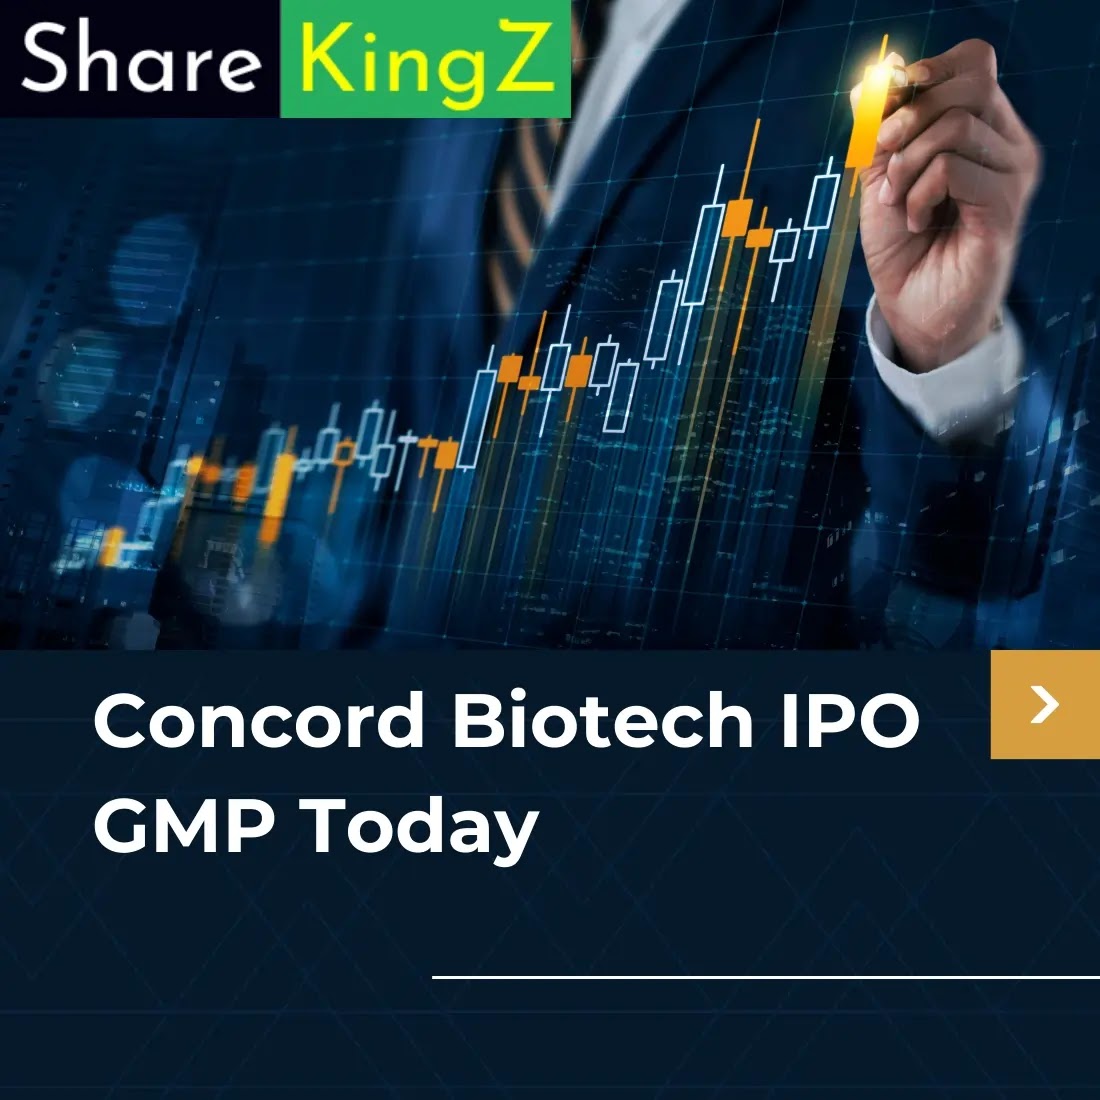 Concord Biotech IPO GMP Today